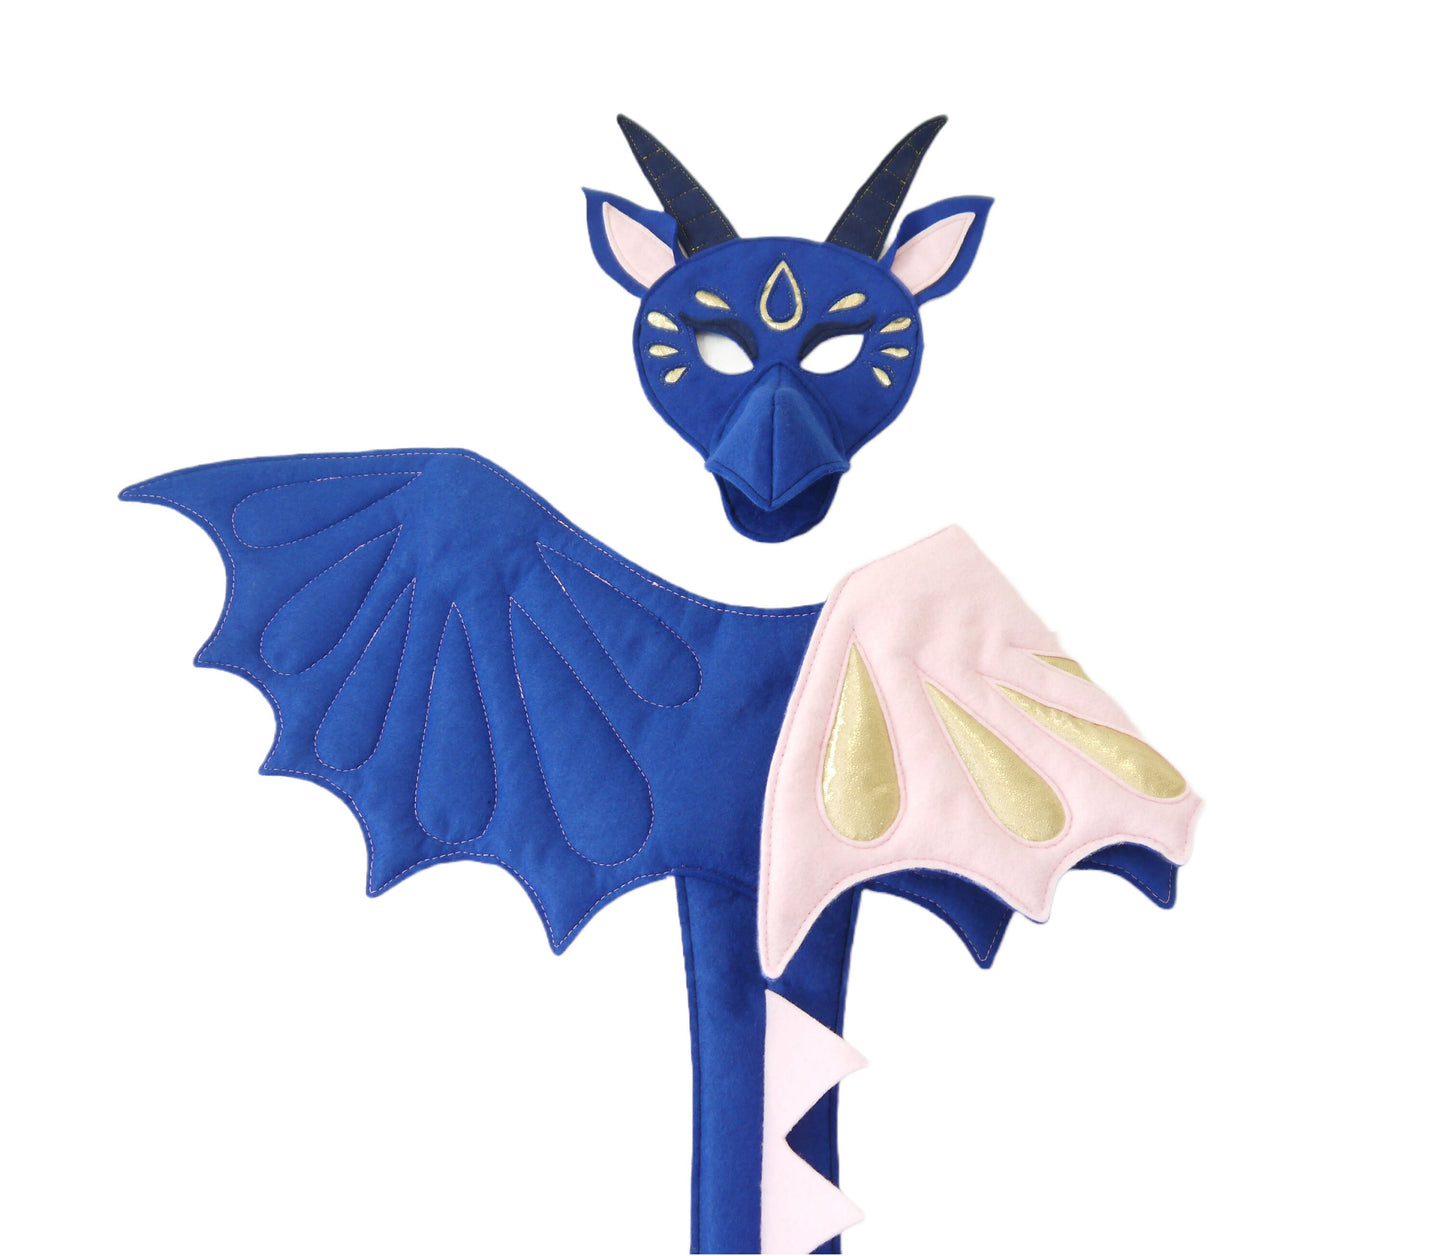 Treasure Dragon costume wings and mask